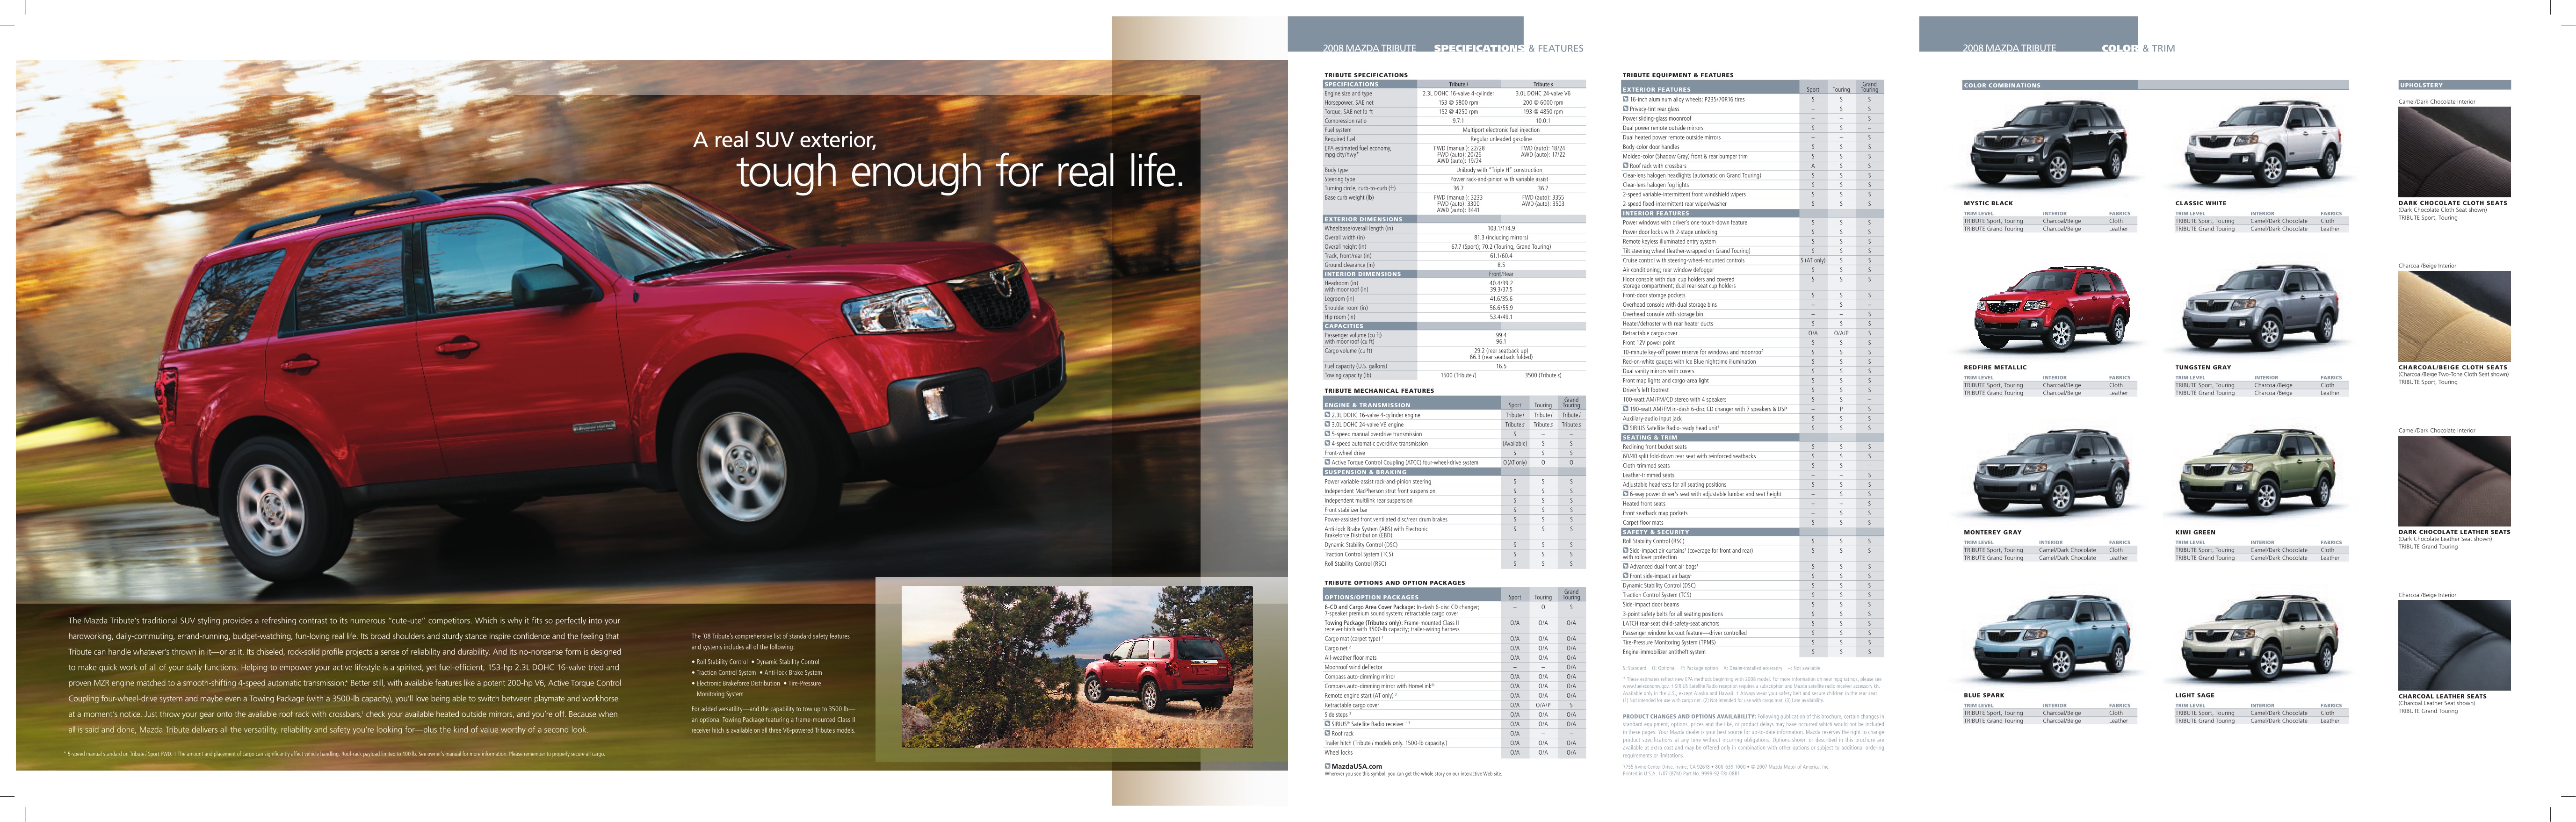 2008 Mazda Tribute Brochure Page 2